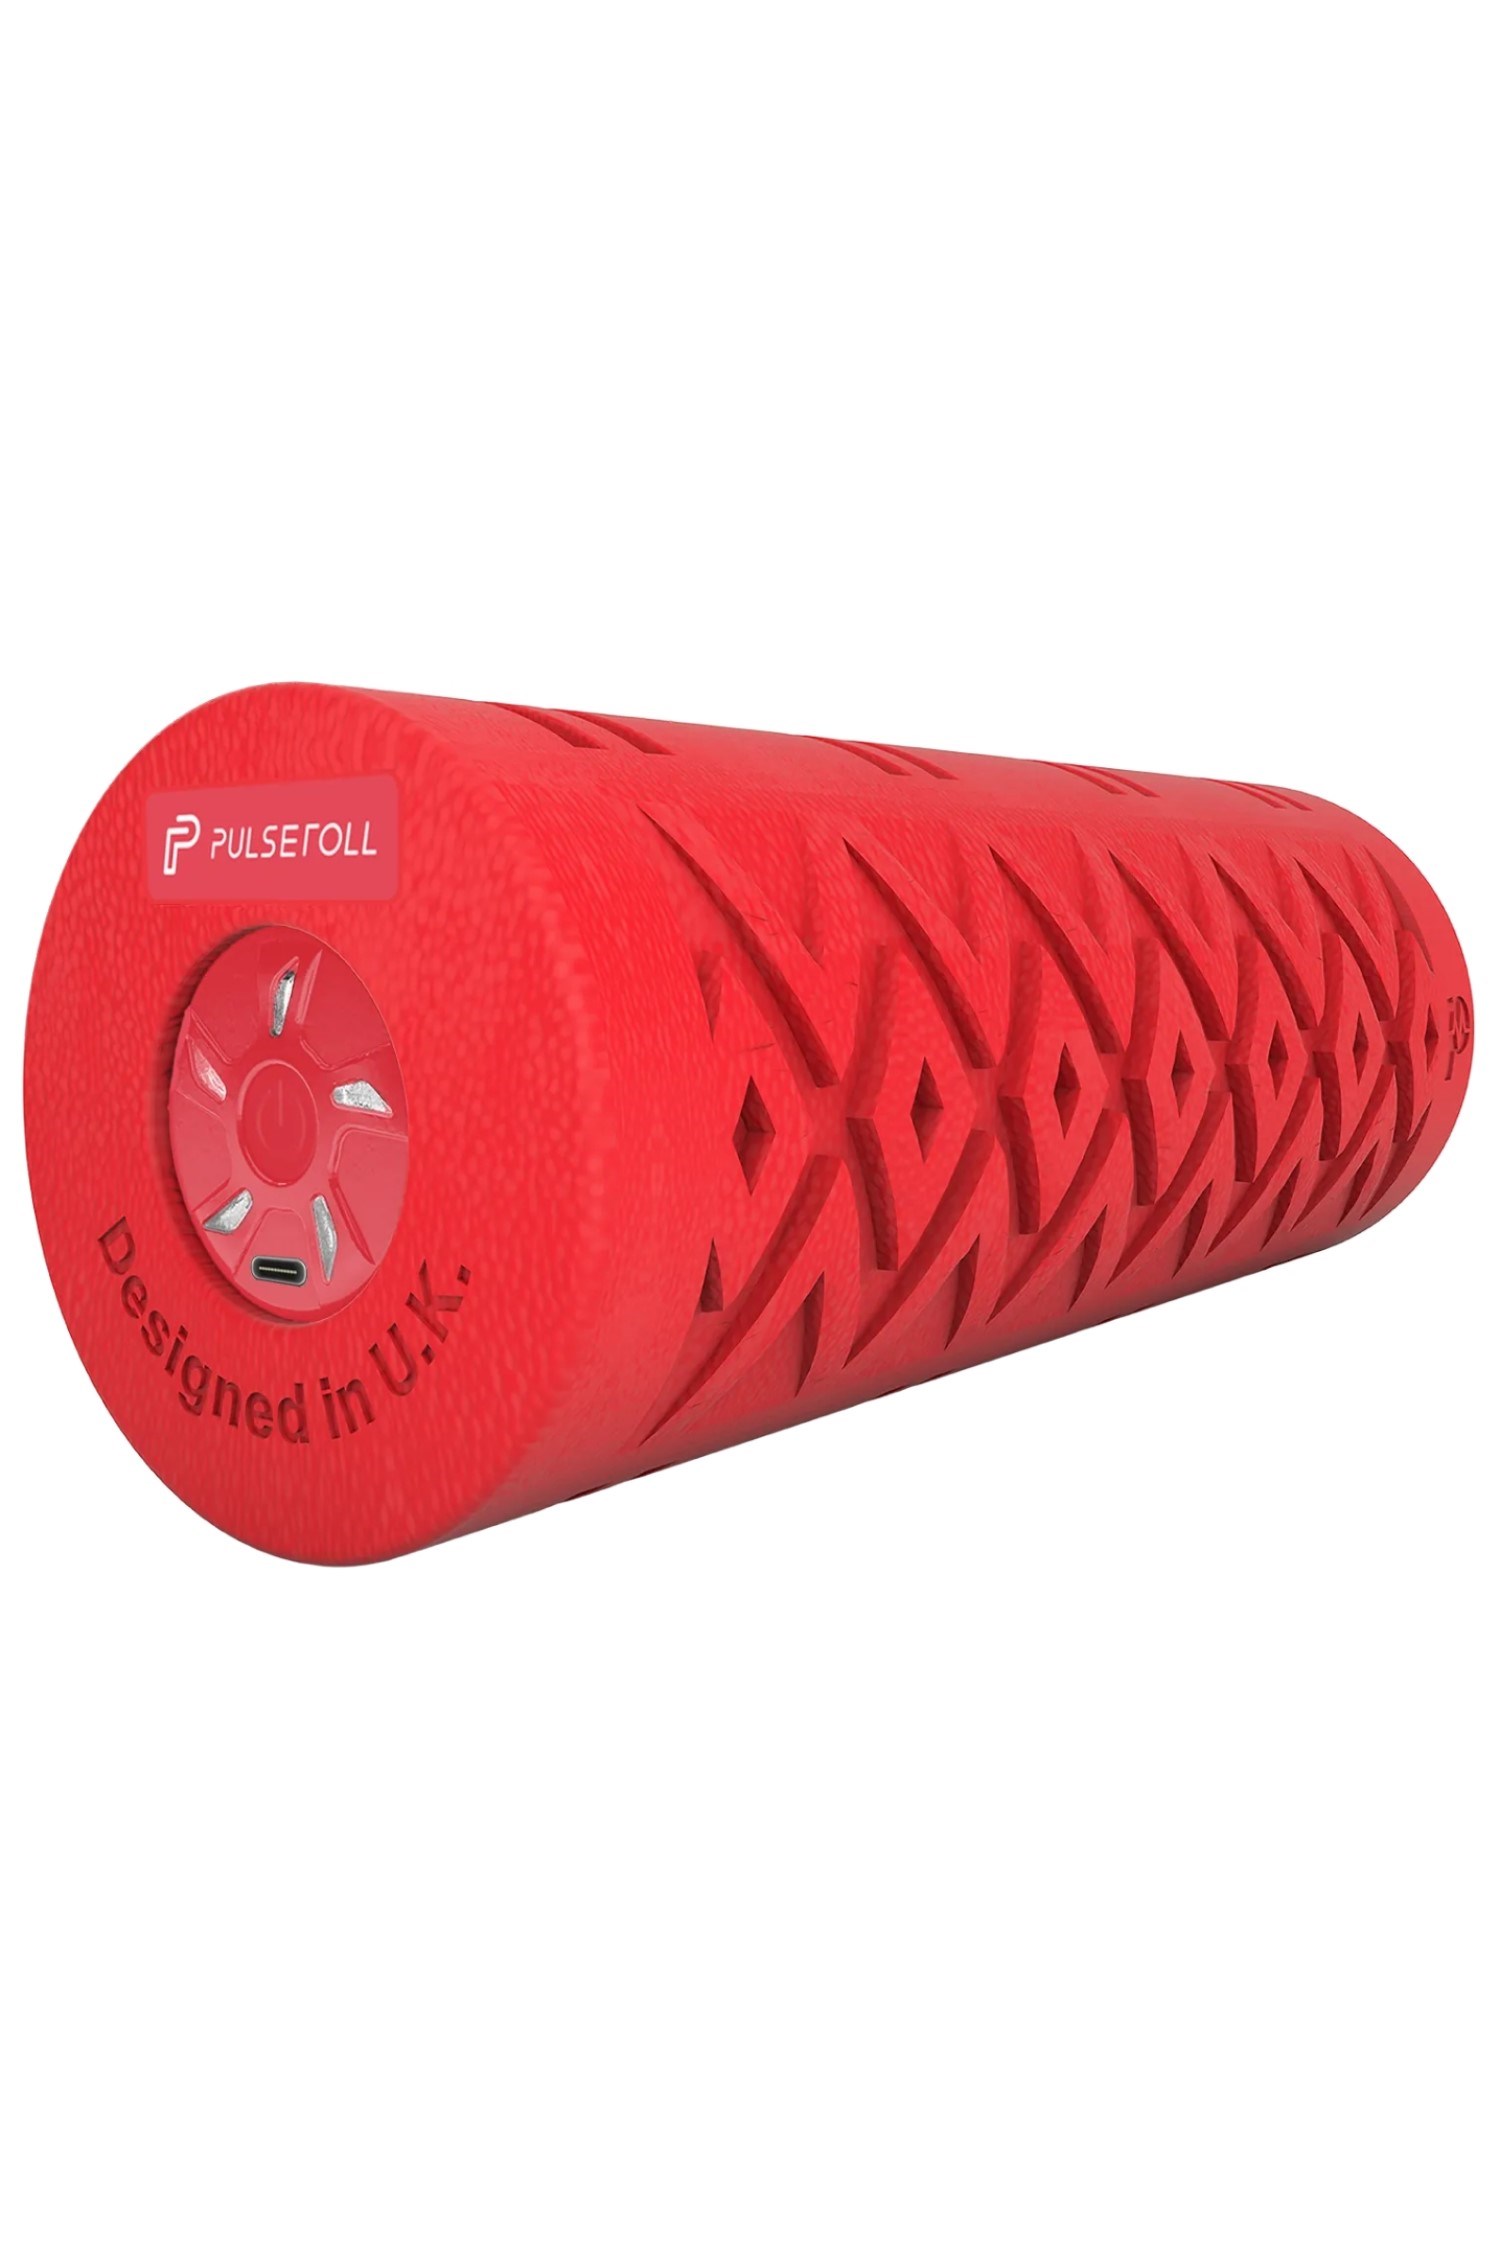 VYB Pro Vibrating Foam Roller -